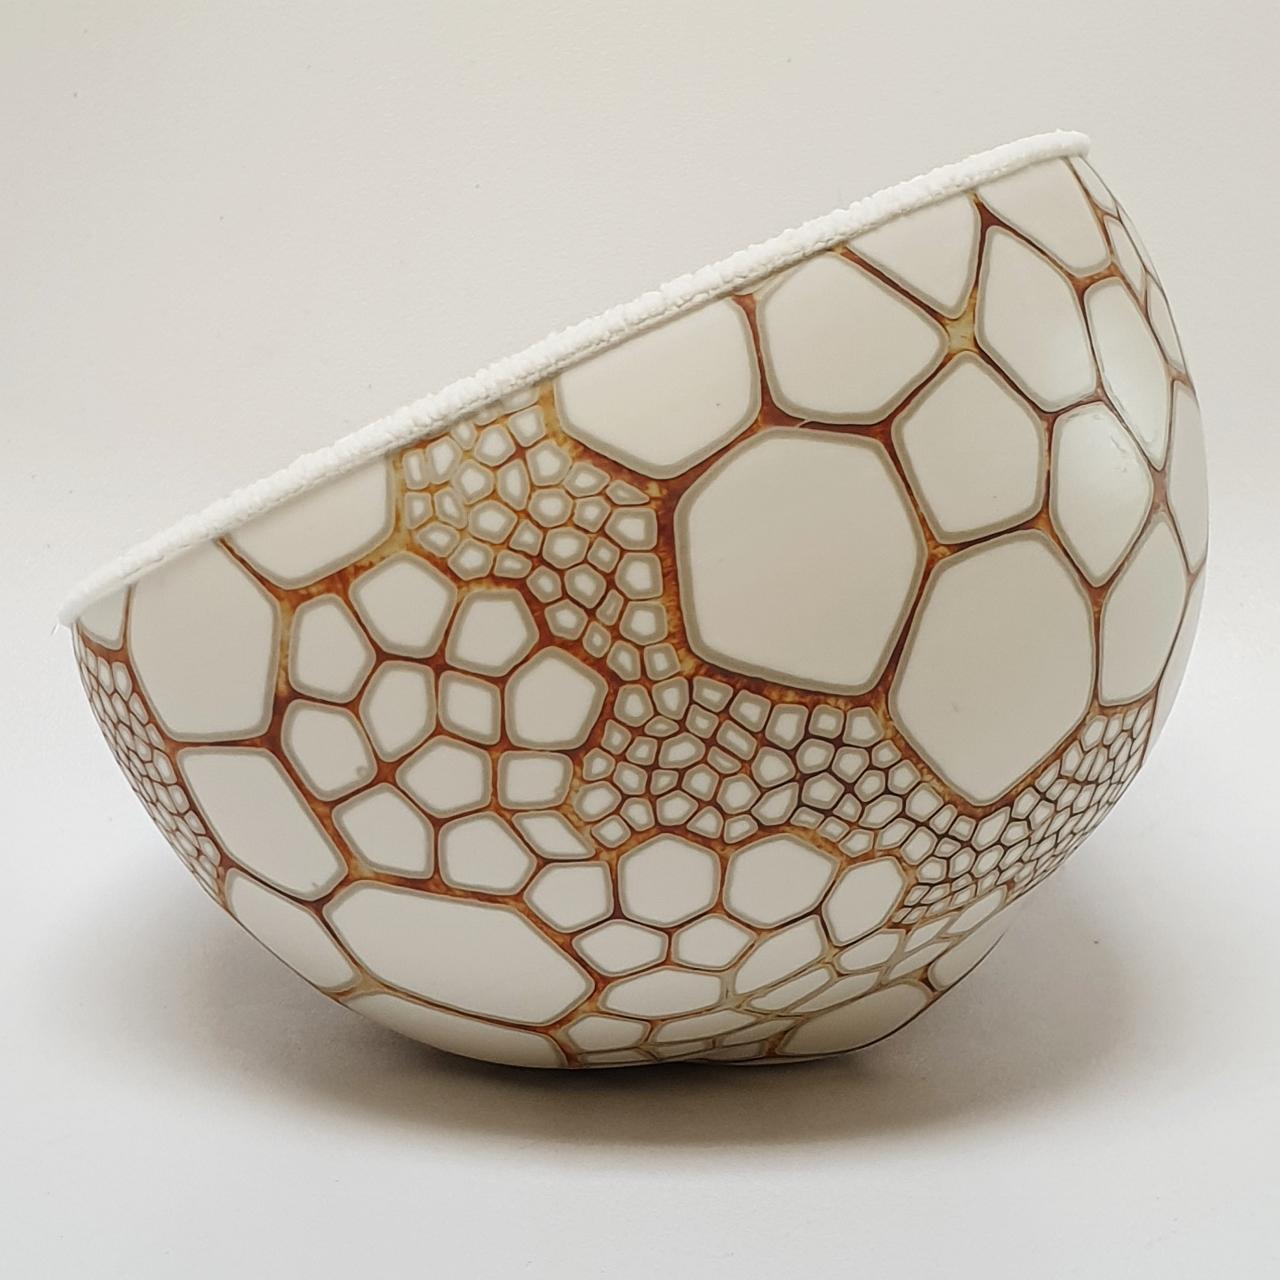 Objekt wackelt - contemporary modern abstract organic ceramic sculpture object - Gray Abstract Sculpture by Petra Benndorf